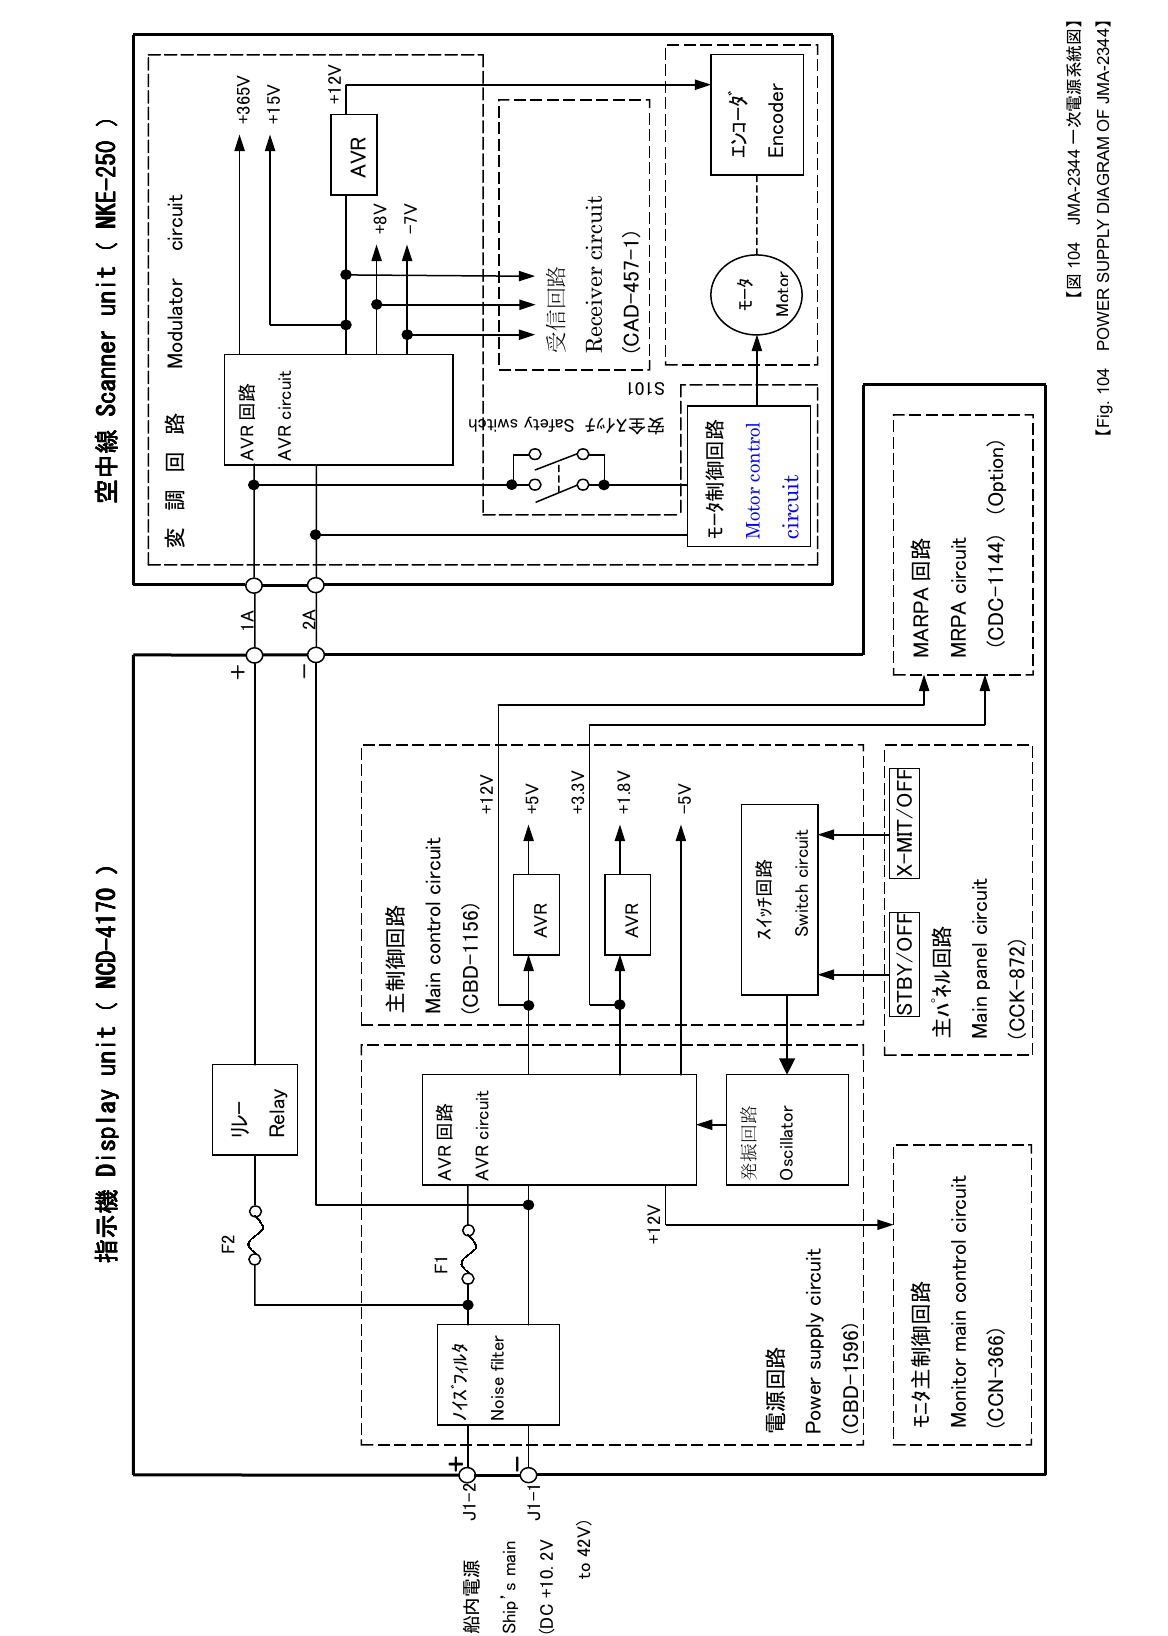  【図 104 JMA-2344 一次電源系統図】 【Fig. 104    POWER SUPPLY DIAGRAM OF JMA-2344】  受信回路  Receiver circuit (CAD-457-1) AVR 回路 AVR circuit AVR +12V -7V +15V +365V +8V 空中線空中線空中線空中線 Scanner unit Scanner unit Scanner unit Scanner unit（（（（ NKE NKE NKE NKE----250 250 250 250 ））））    ﾓｰﾀ Motor1A 2A 安全ｽｲｯﾁ Safety switch S101 ｴﾝｺｰﾀﾞ Encoder AVR ﾉｲｽﾞﾌｨﾙﾀ Noise filter AVR 回路 AVR circuit ｽｲｯﾁ回路 Switch circuit 発振回路 Oscillator    STBY/OFF   X-MIT/OFF 主ﾊﾟﾈﾙ回路  Main panel circuit (CCK-872) 電源回路 Power supply circuit (CBD-1596)主制御回路 Main control circuit (CBD-1156) +12V -5V +1.8V AVR  +5V +3.3V MARPA 回路 MRPA circuit  (CDC-1144)  (Option) ﾓﾆﾀ主制御回路 Monitor main control circuit   (CCN-366) ﾘﾚｰ Relay F2 F1 指示機指示機指示機指示機 Display unit Display unit Display unit Display unit（（（（ NCD NCD NCD NCD----4170 4170 4170 4170 ））））    ＋＋＋＋    －－－－    船内電源 Ship’s main (DC +10. 2V to 42V) ＋＋＋＋    －－－－    J1-2 J1-1 +12V 変調回路 Modulator circuit ﾓｰﾀ制御回路 Motor control circuit 